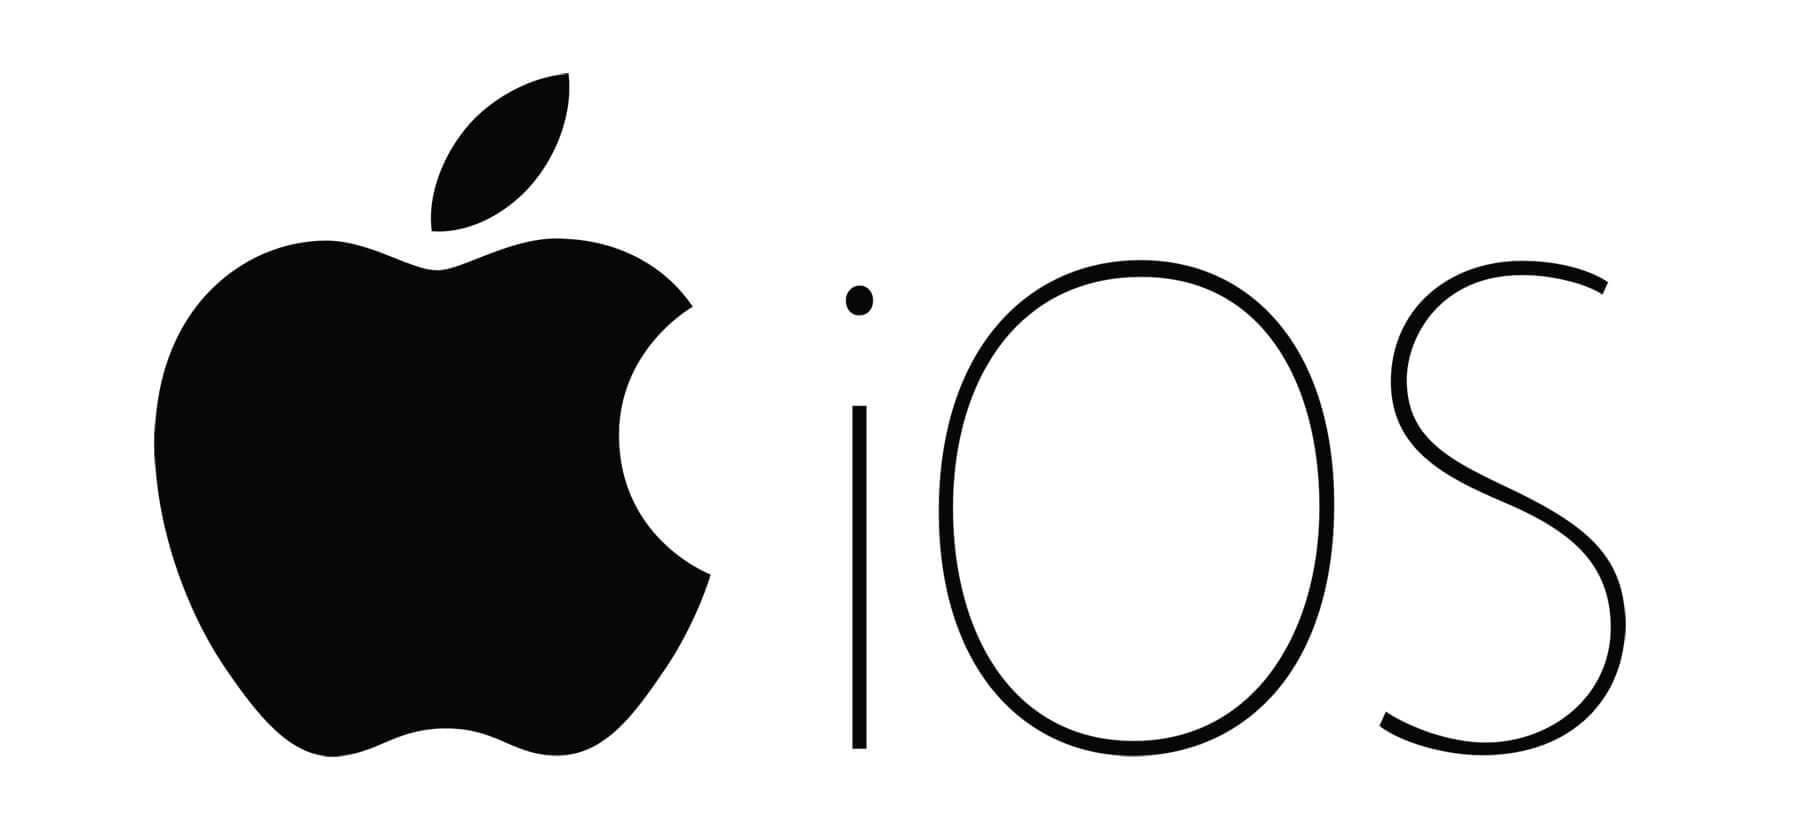 iOS-logo-photo